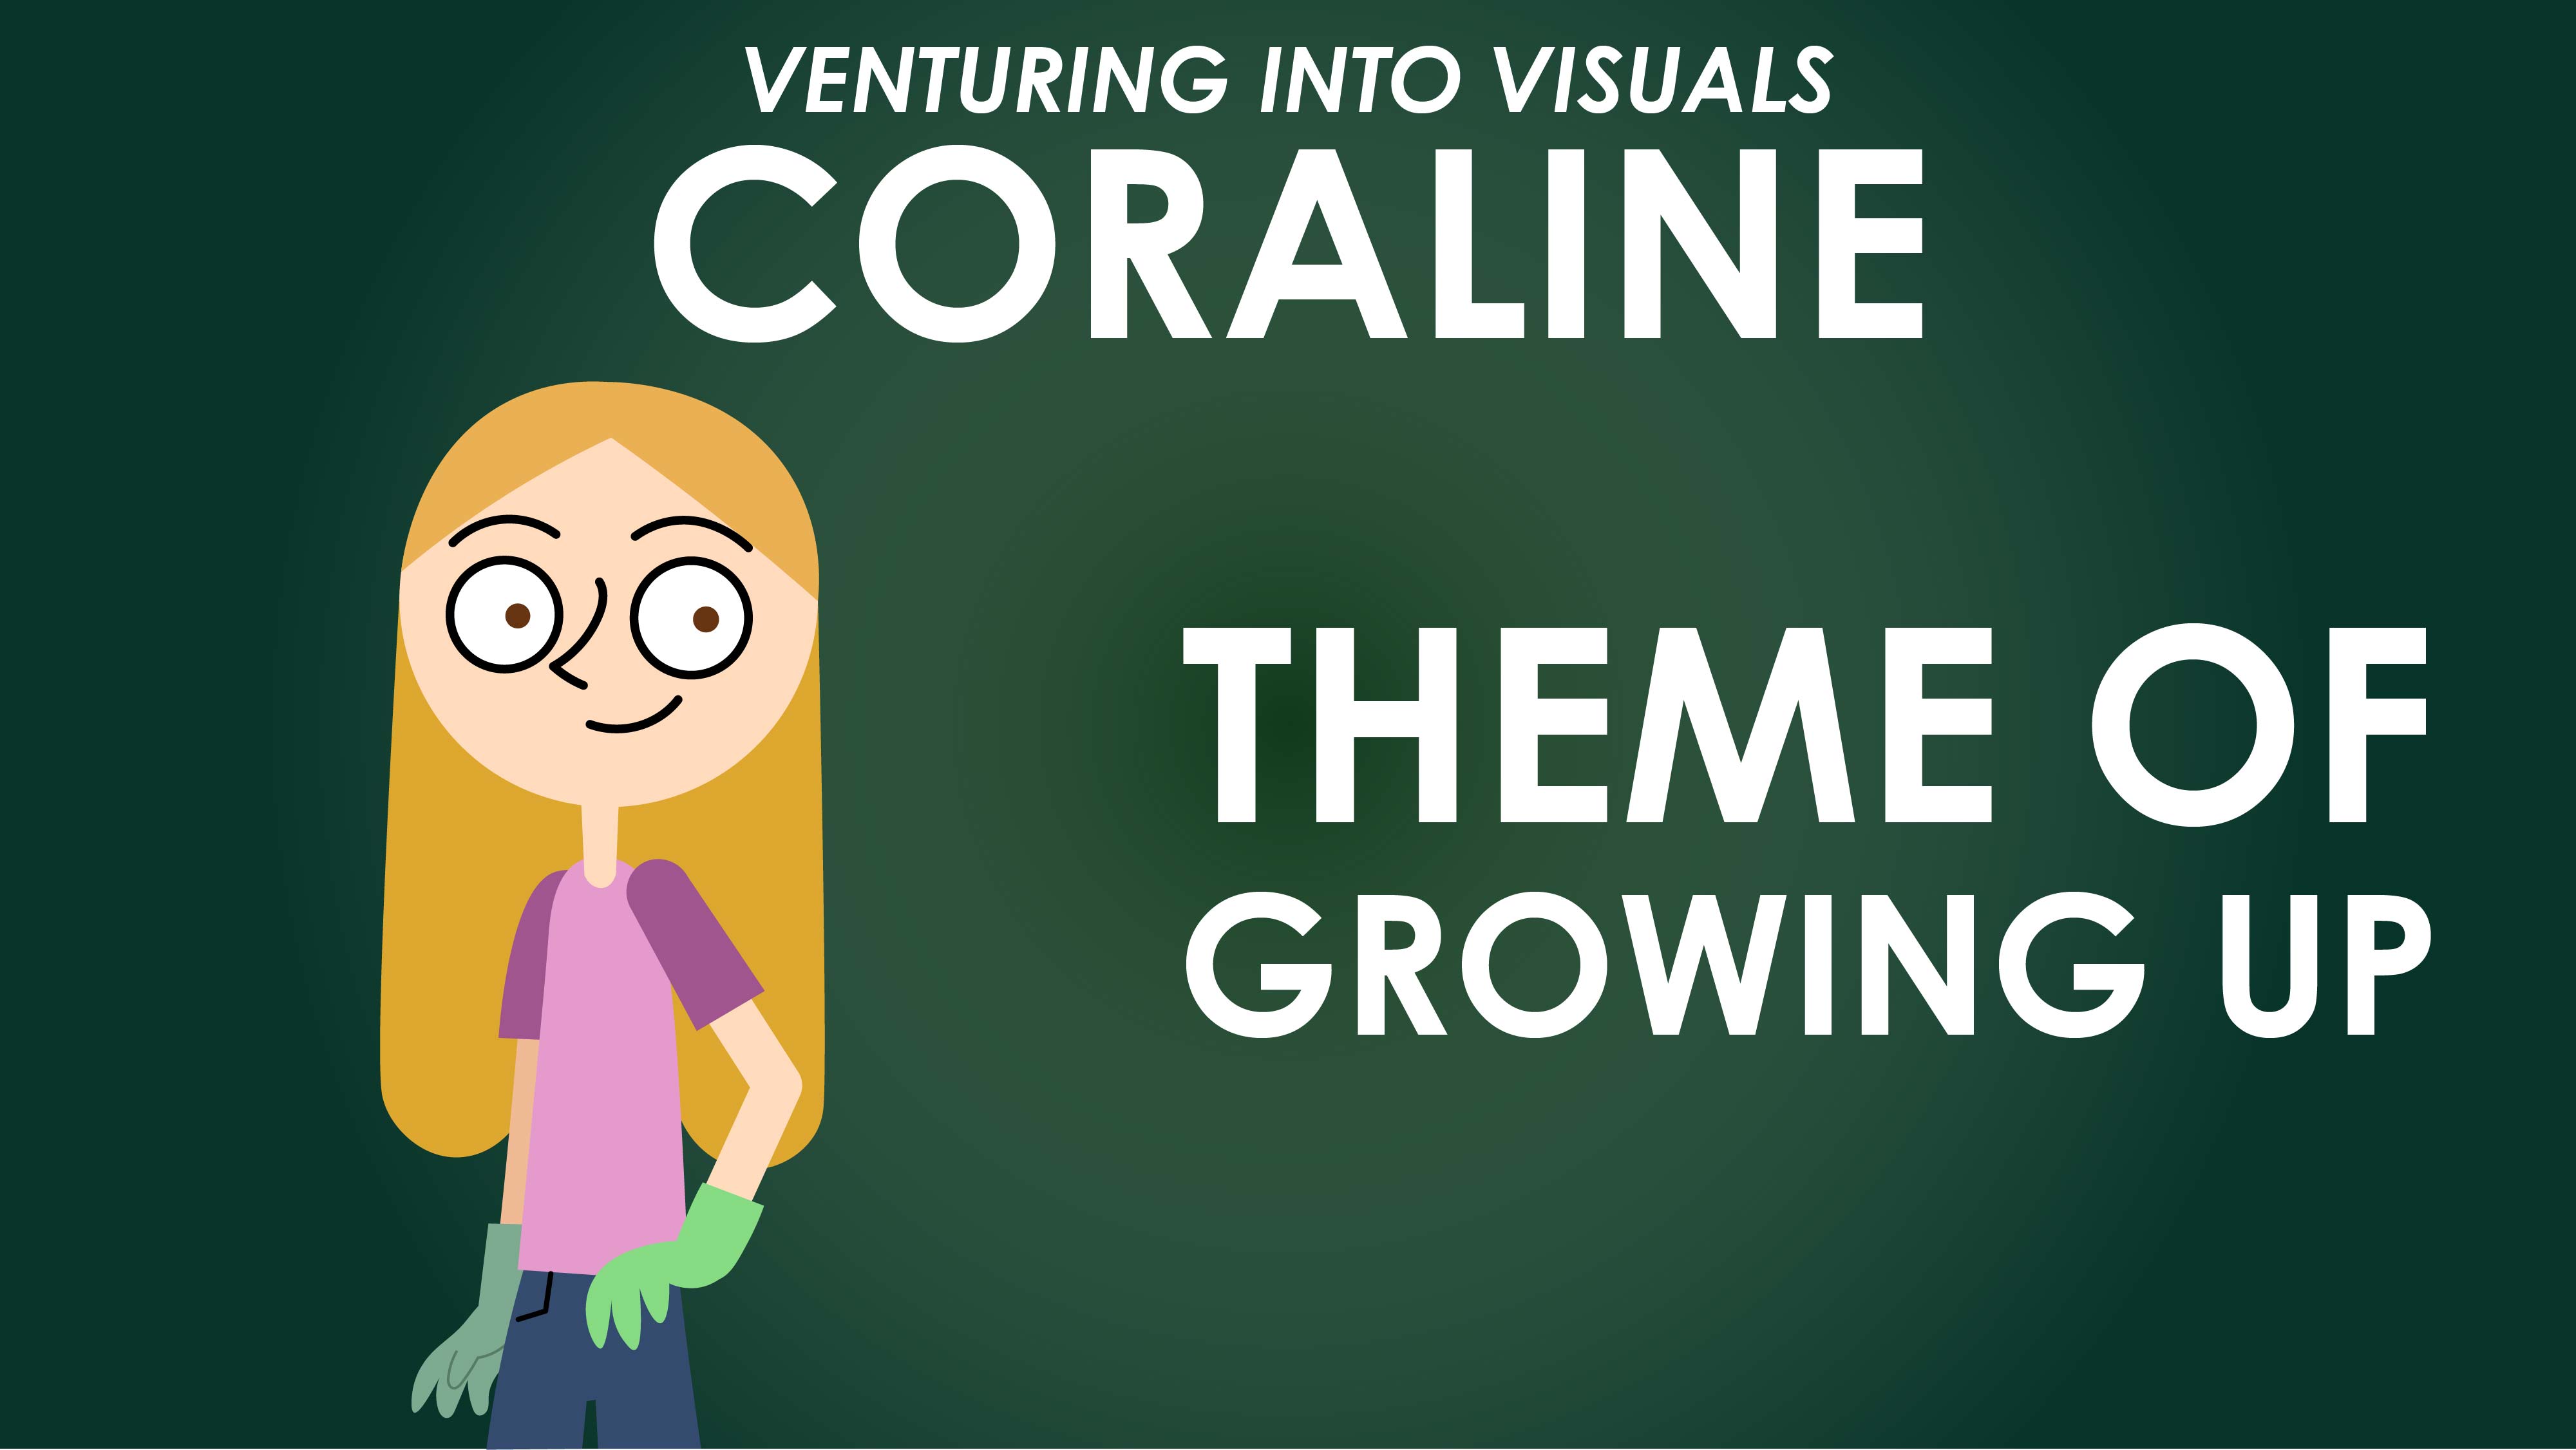  Coraline - Neil Gaiman - Theme of Growing Up - Venturing Into Visuals Series